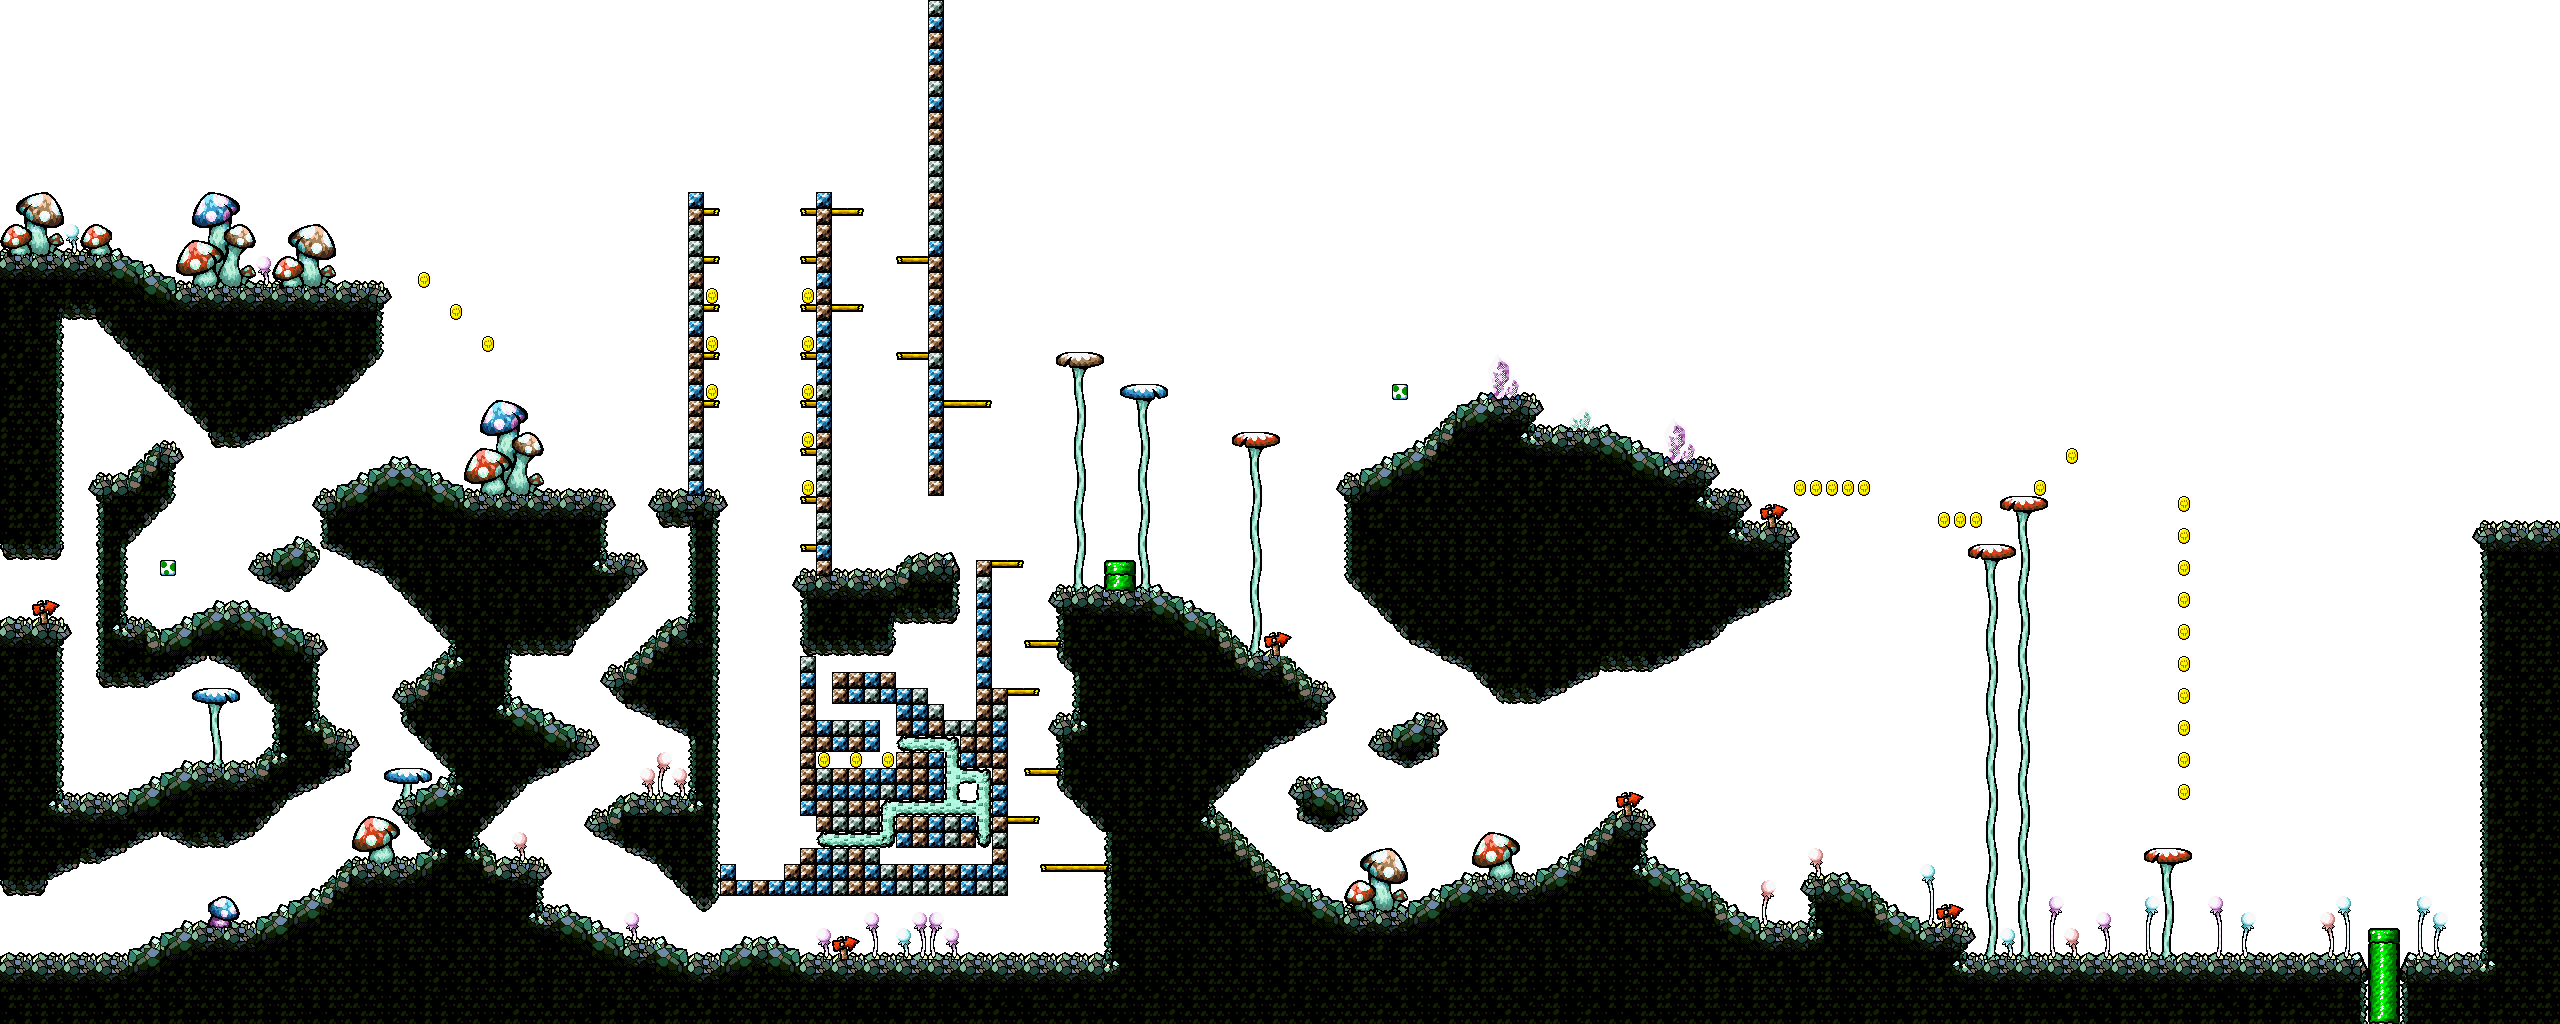 Super Mario World 2: Yoshi's Island - 3-6: The Cave Of Harry Hedgehog (2/3)